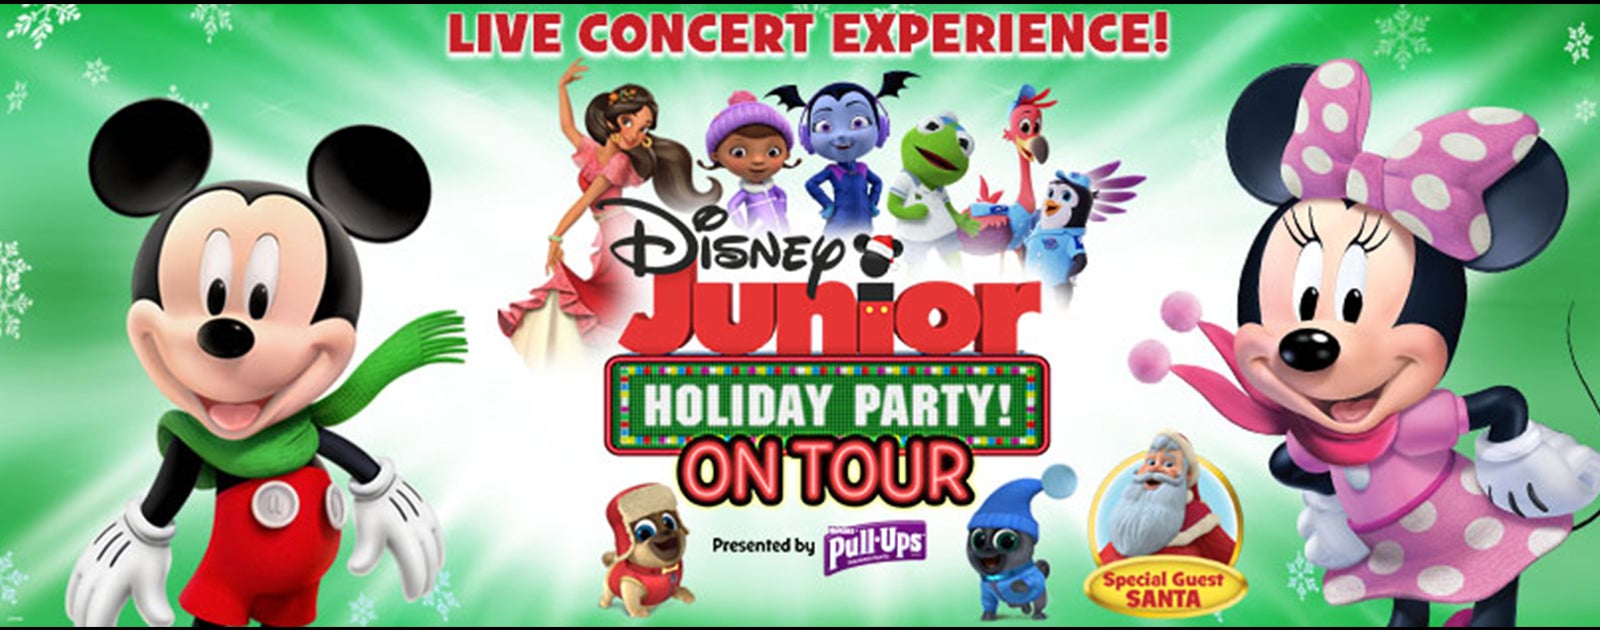 Disney Junior Holiday Party!